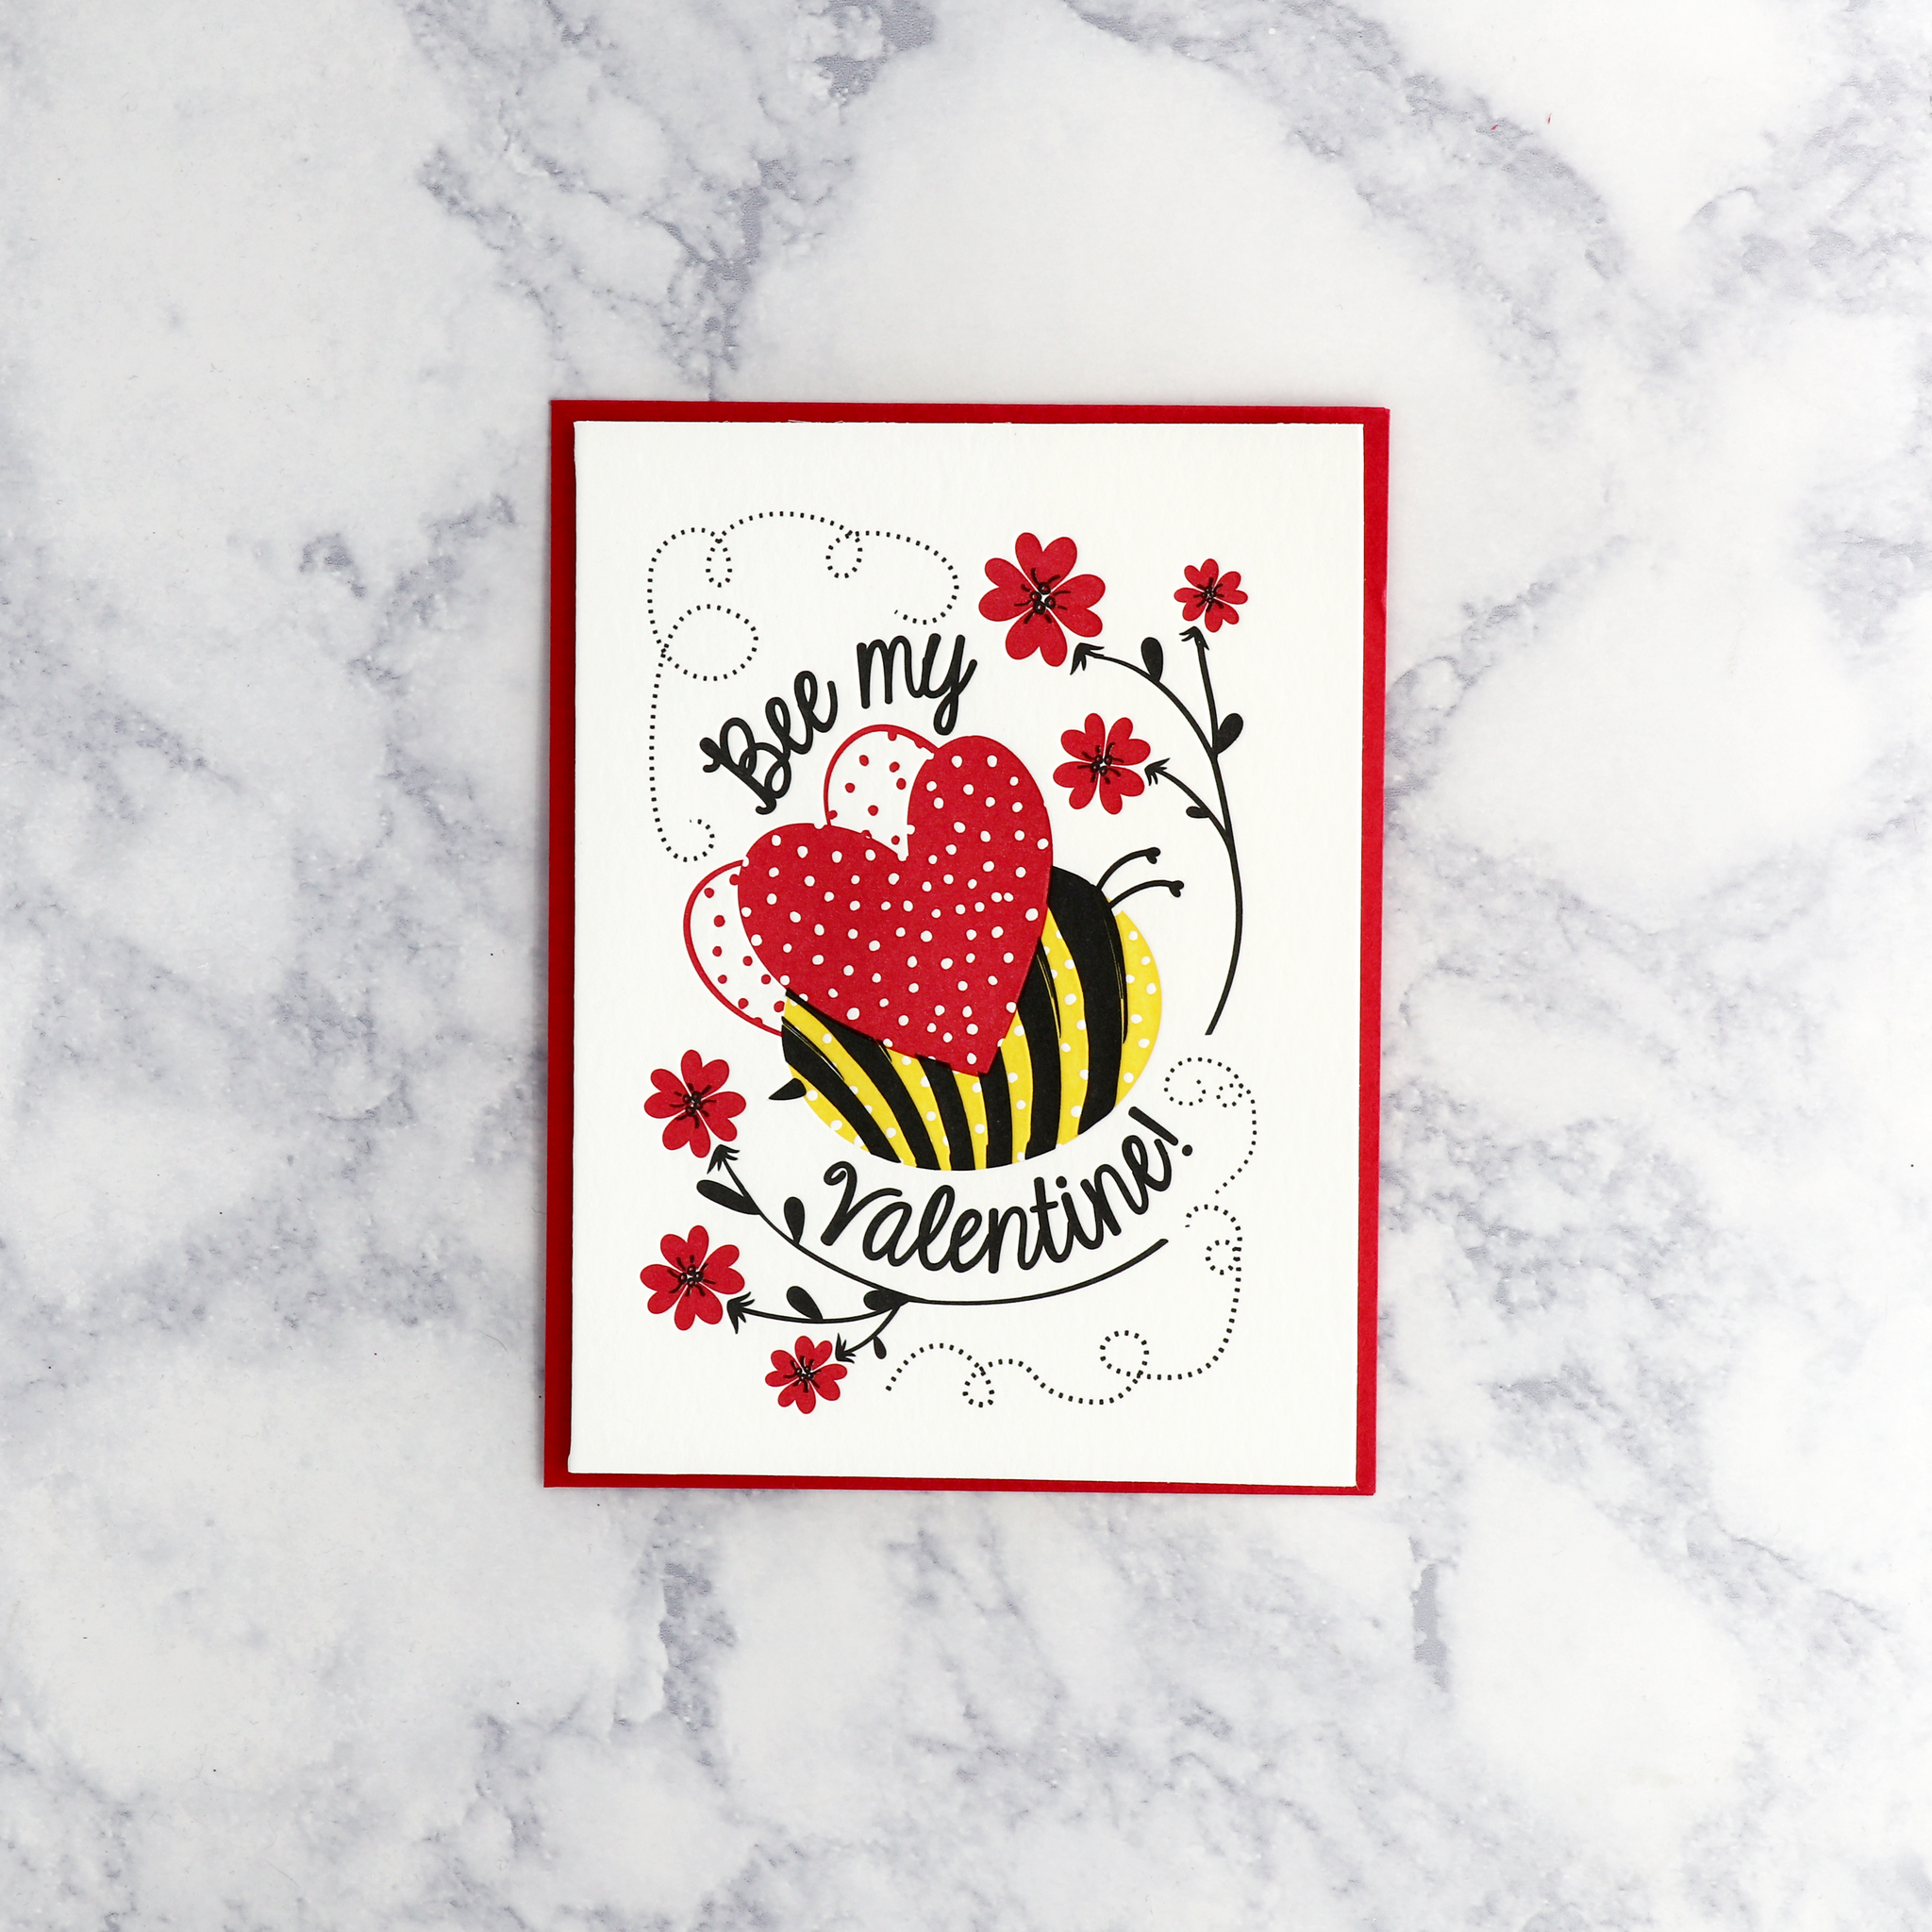 Letterpress “Bee My Valentine!” Valentine’s Day Card